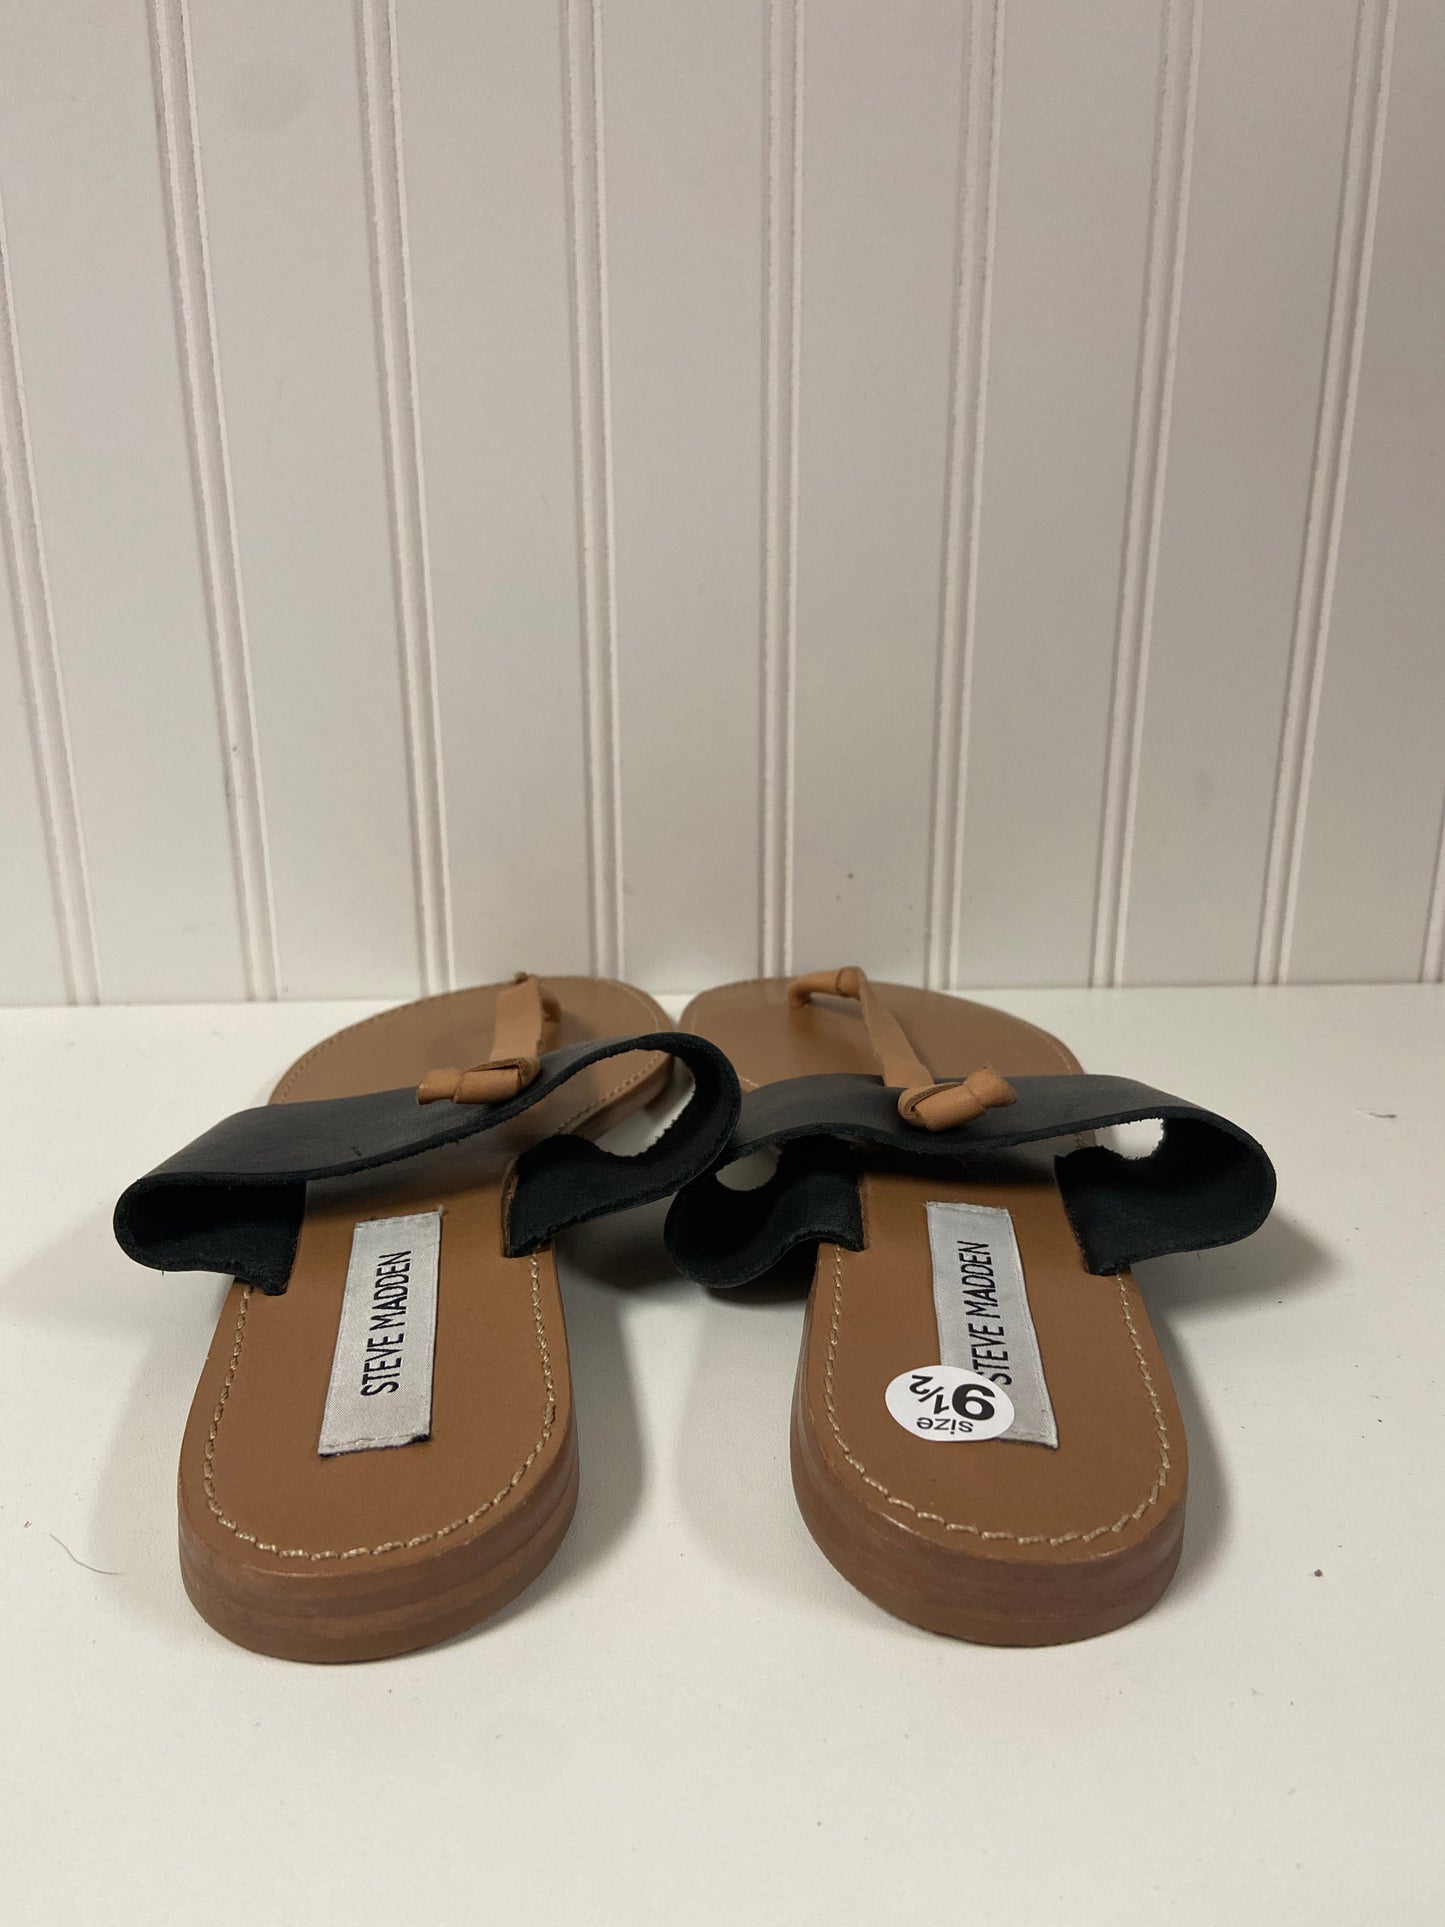 Tan Sandals Flip Flops Steve Madden, Size 9.5